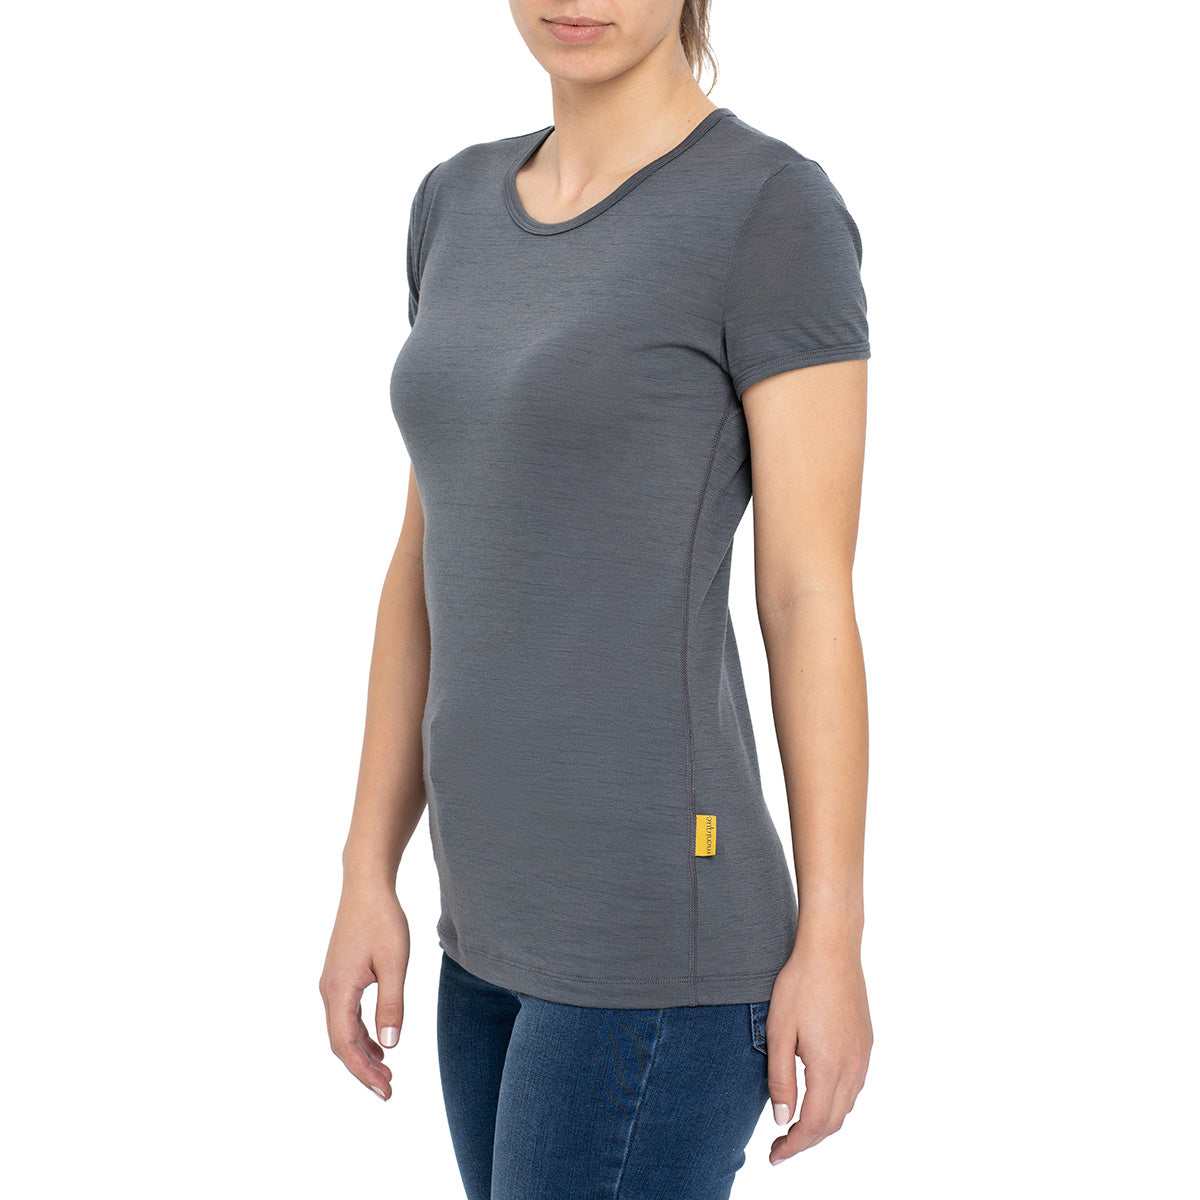 MENIQUE 100% Merino Wool Womens Shirt Perfect Grey